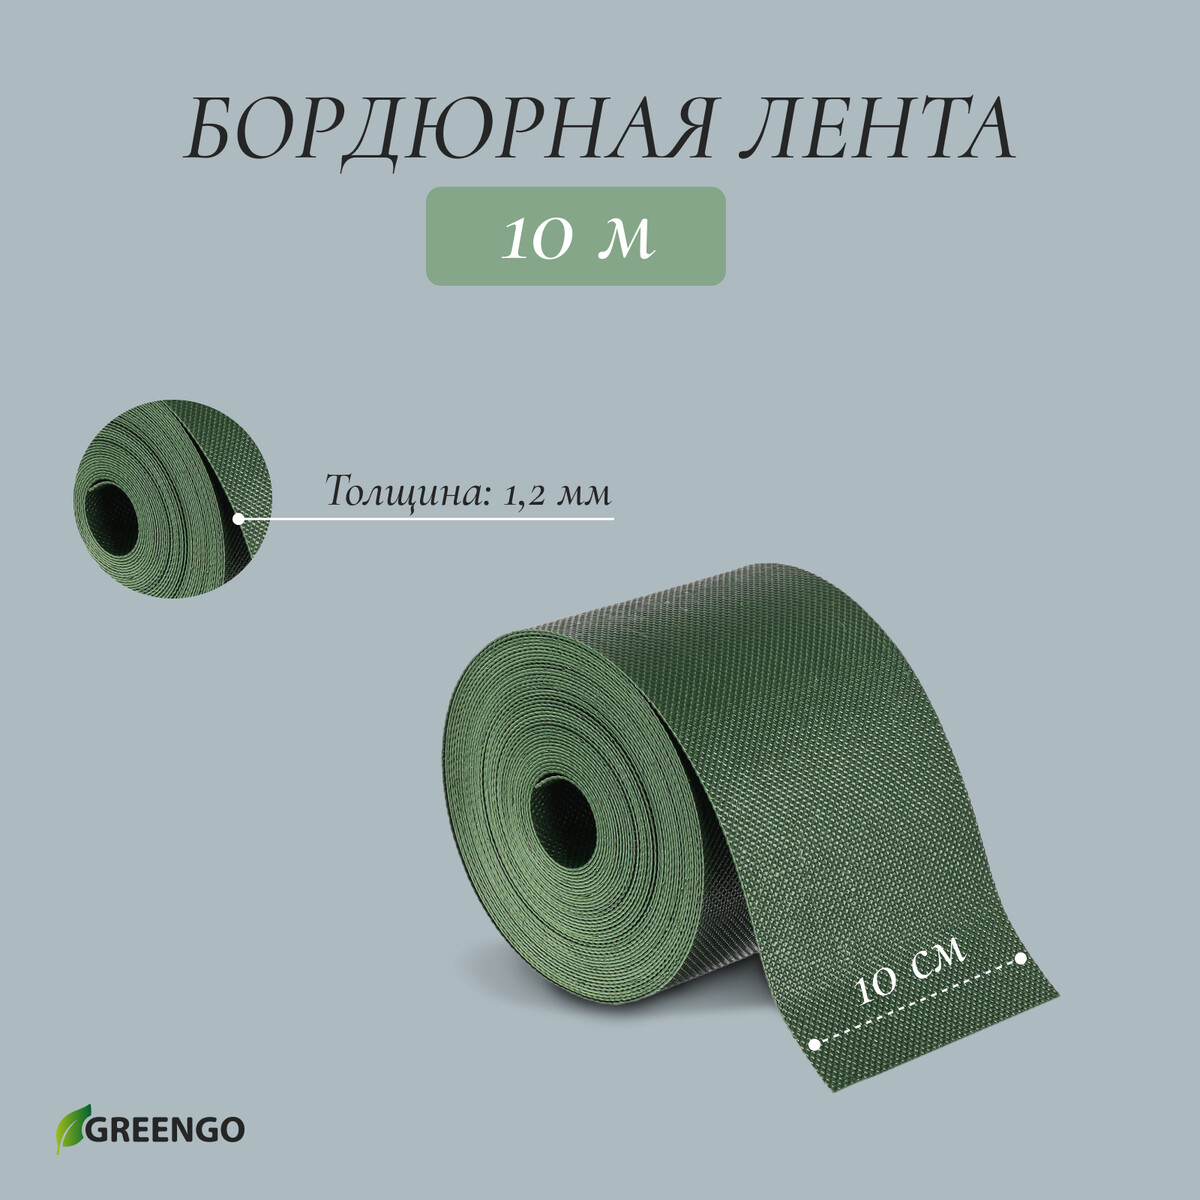 Лента бордюрная, 0.1 × 10 м, толщина 1.2 мм, пластиковая, зеленая, greengo резиновая лента red skill зеленая 2